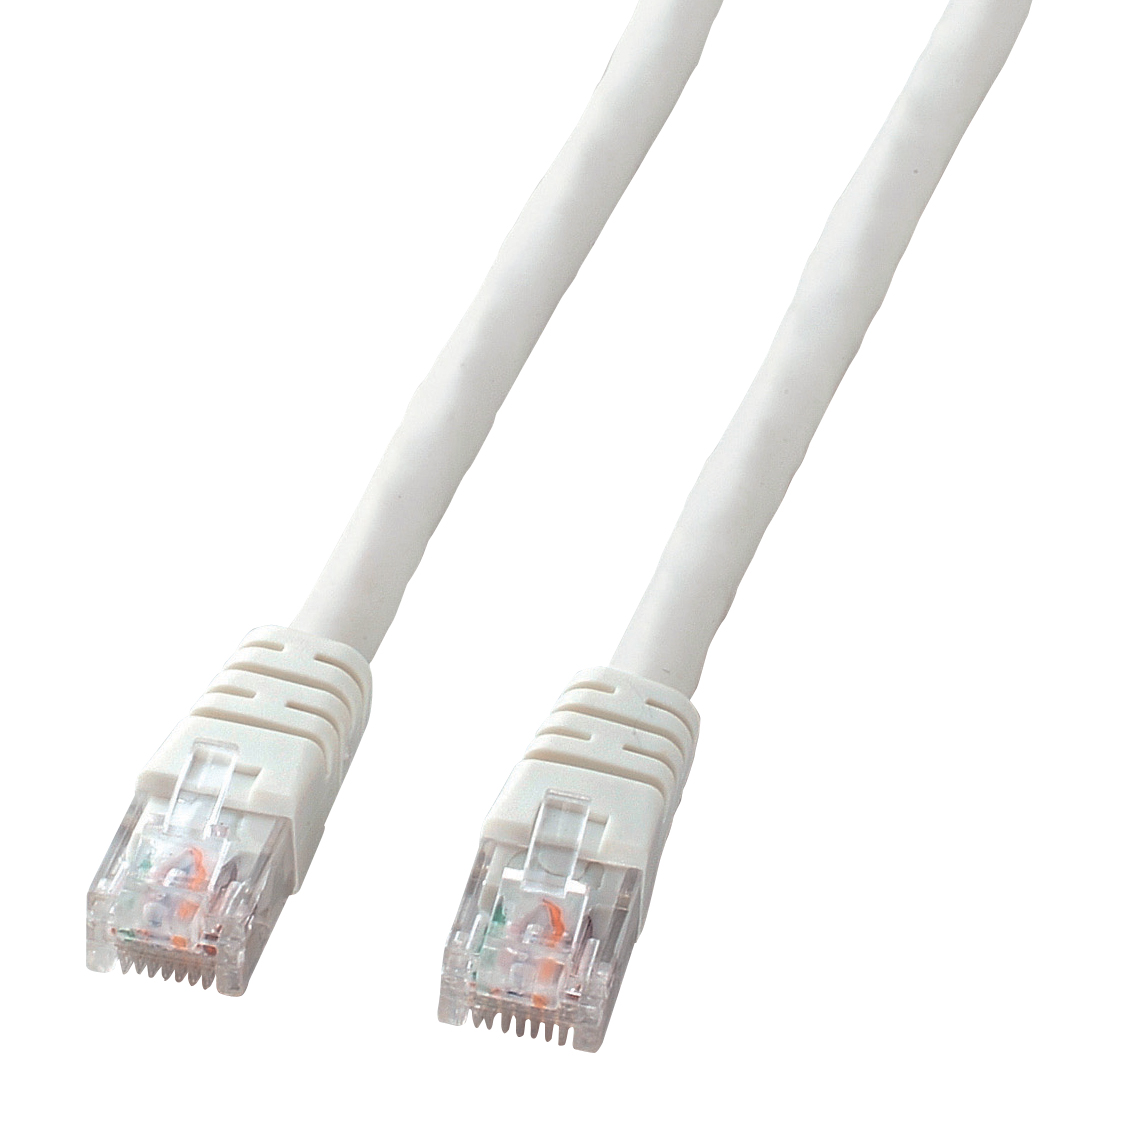 Enhanced CAT6 LAN cable (simple packaging type)